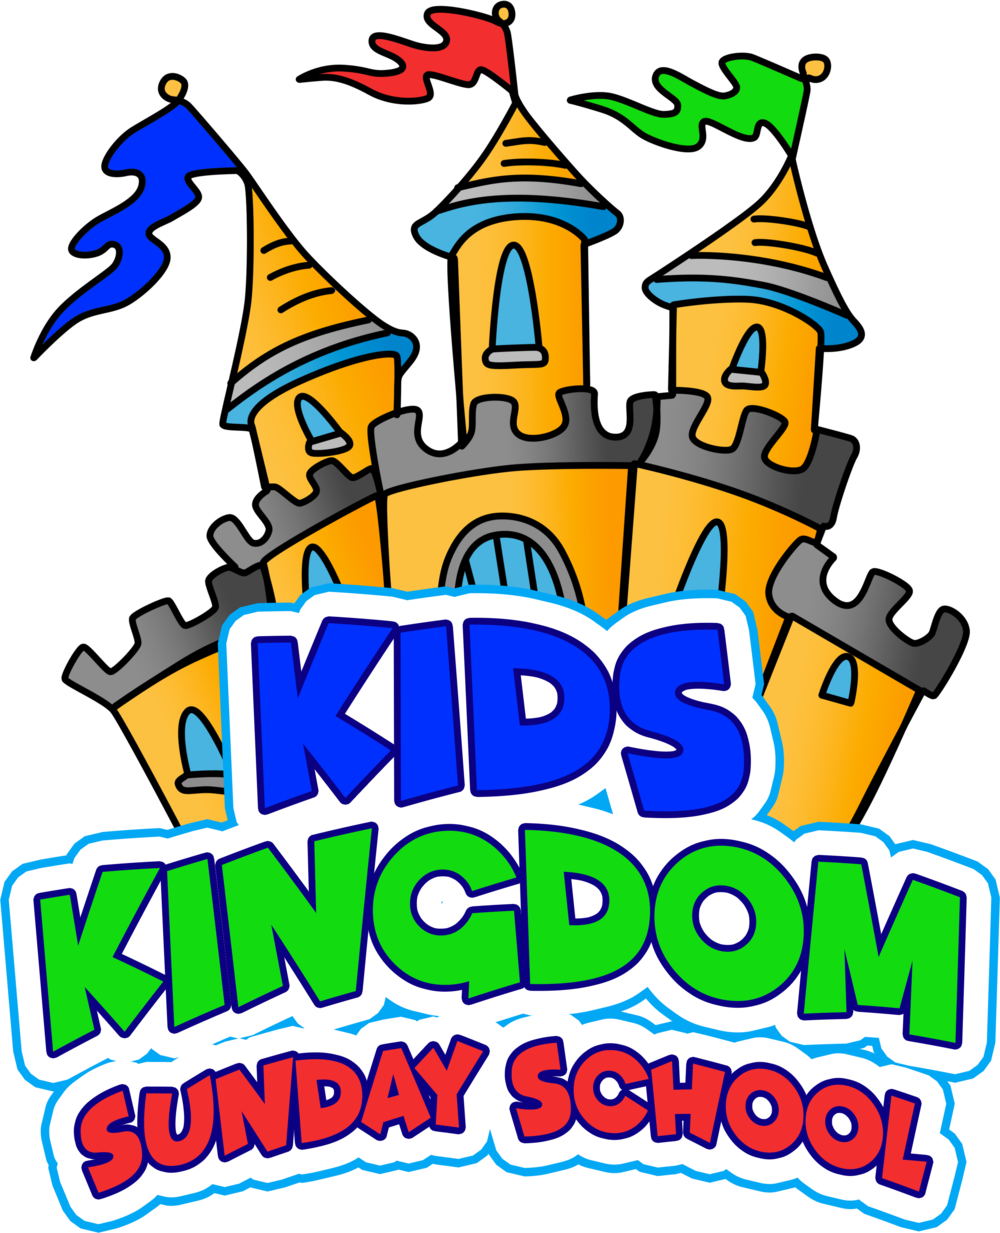 Download Sunday School Kids Kingdom Logo - Kids Kingdom PNG Image with No  Background 